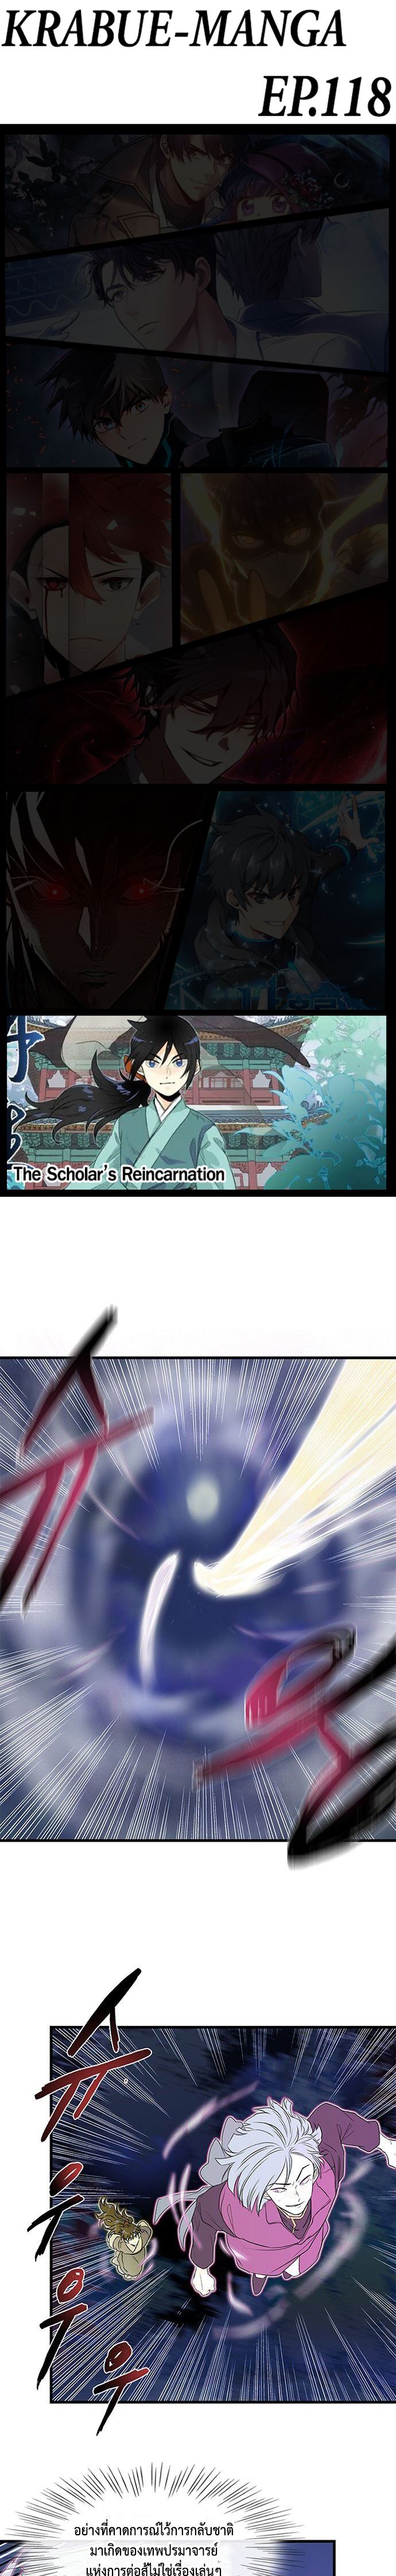 The Scholar’s Reincarnation 118 (1)